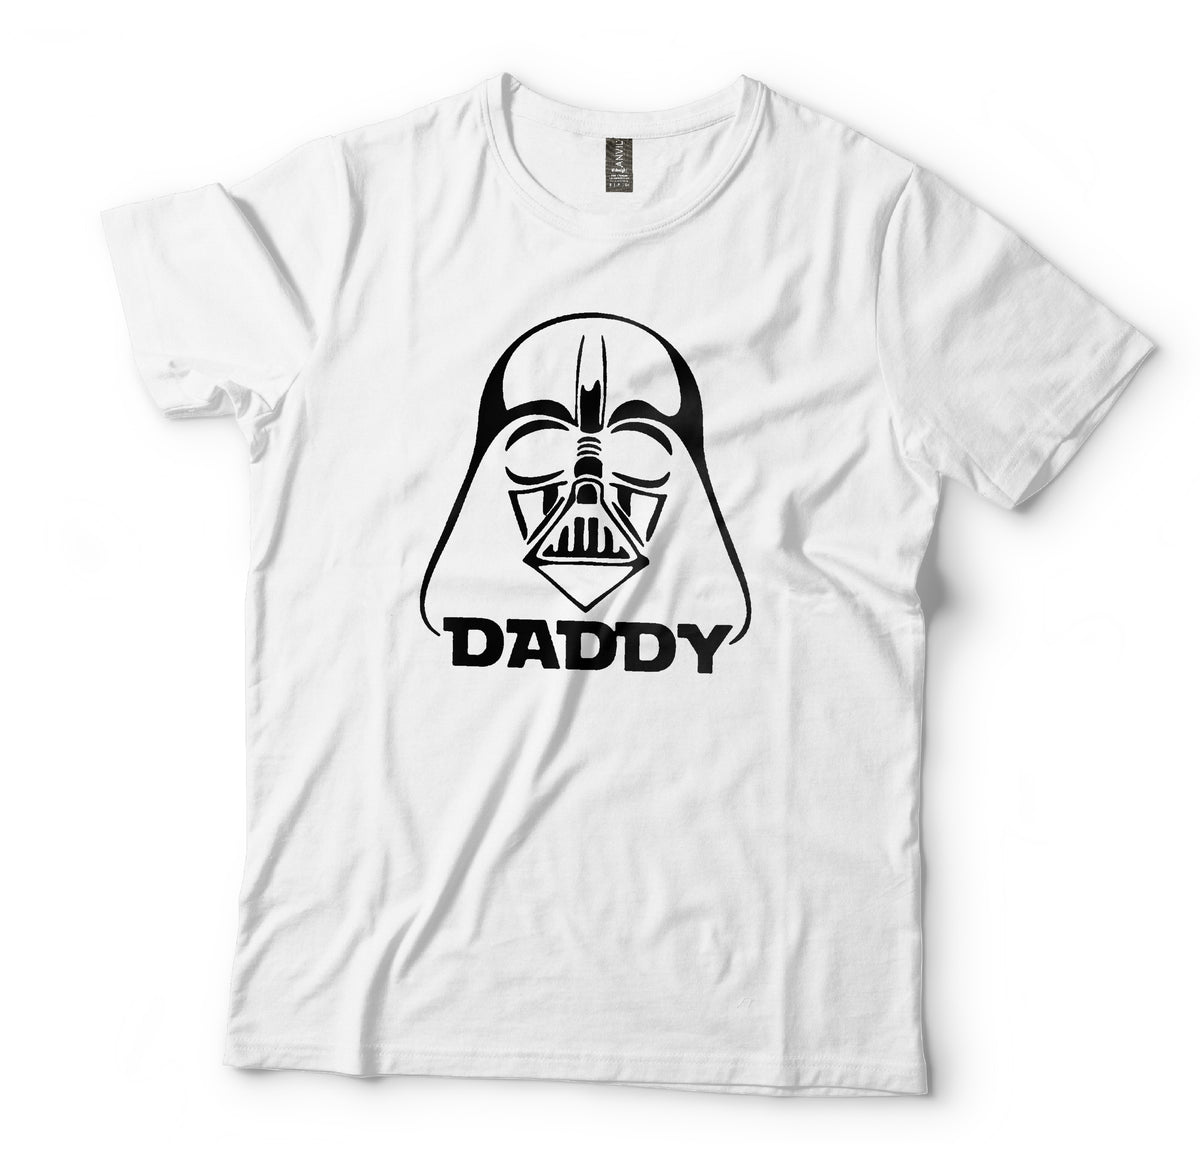 Darth Vader Daddy T-Shirt